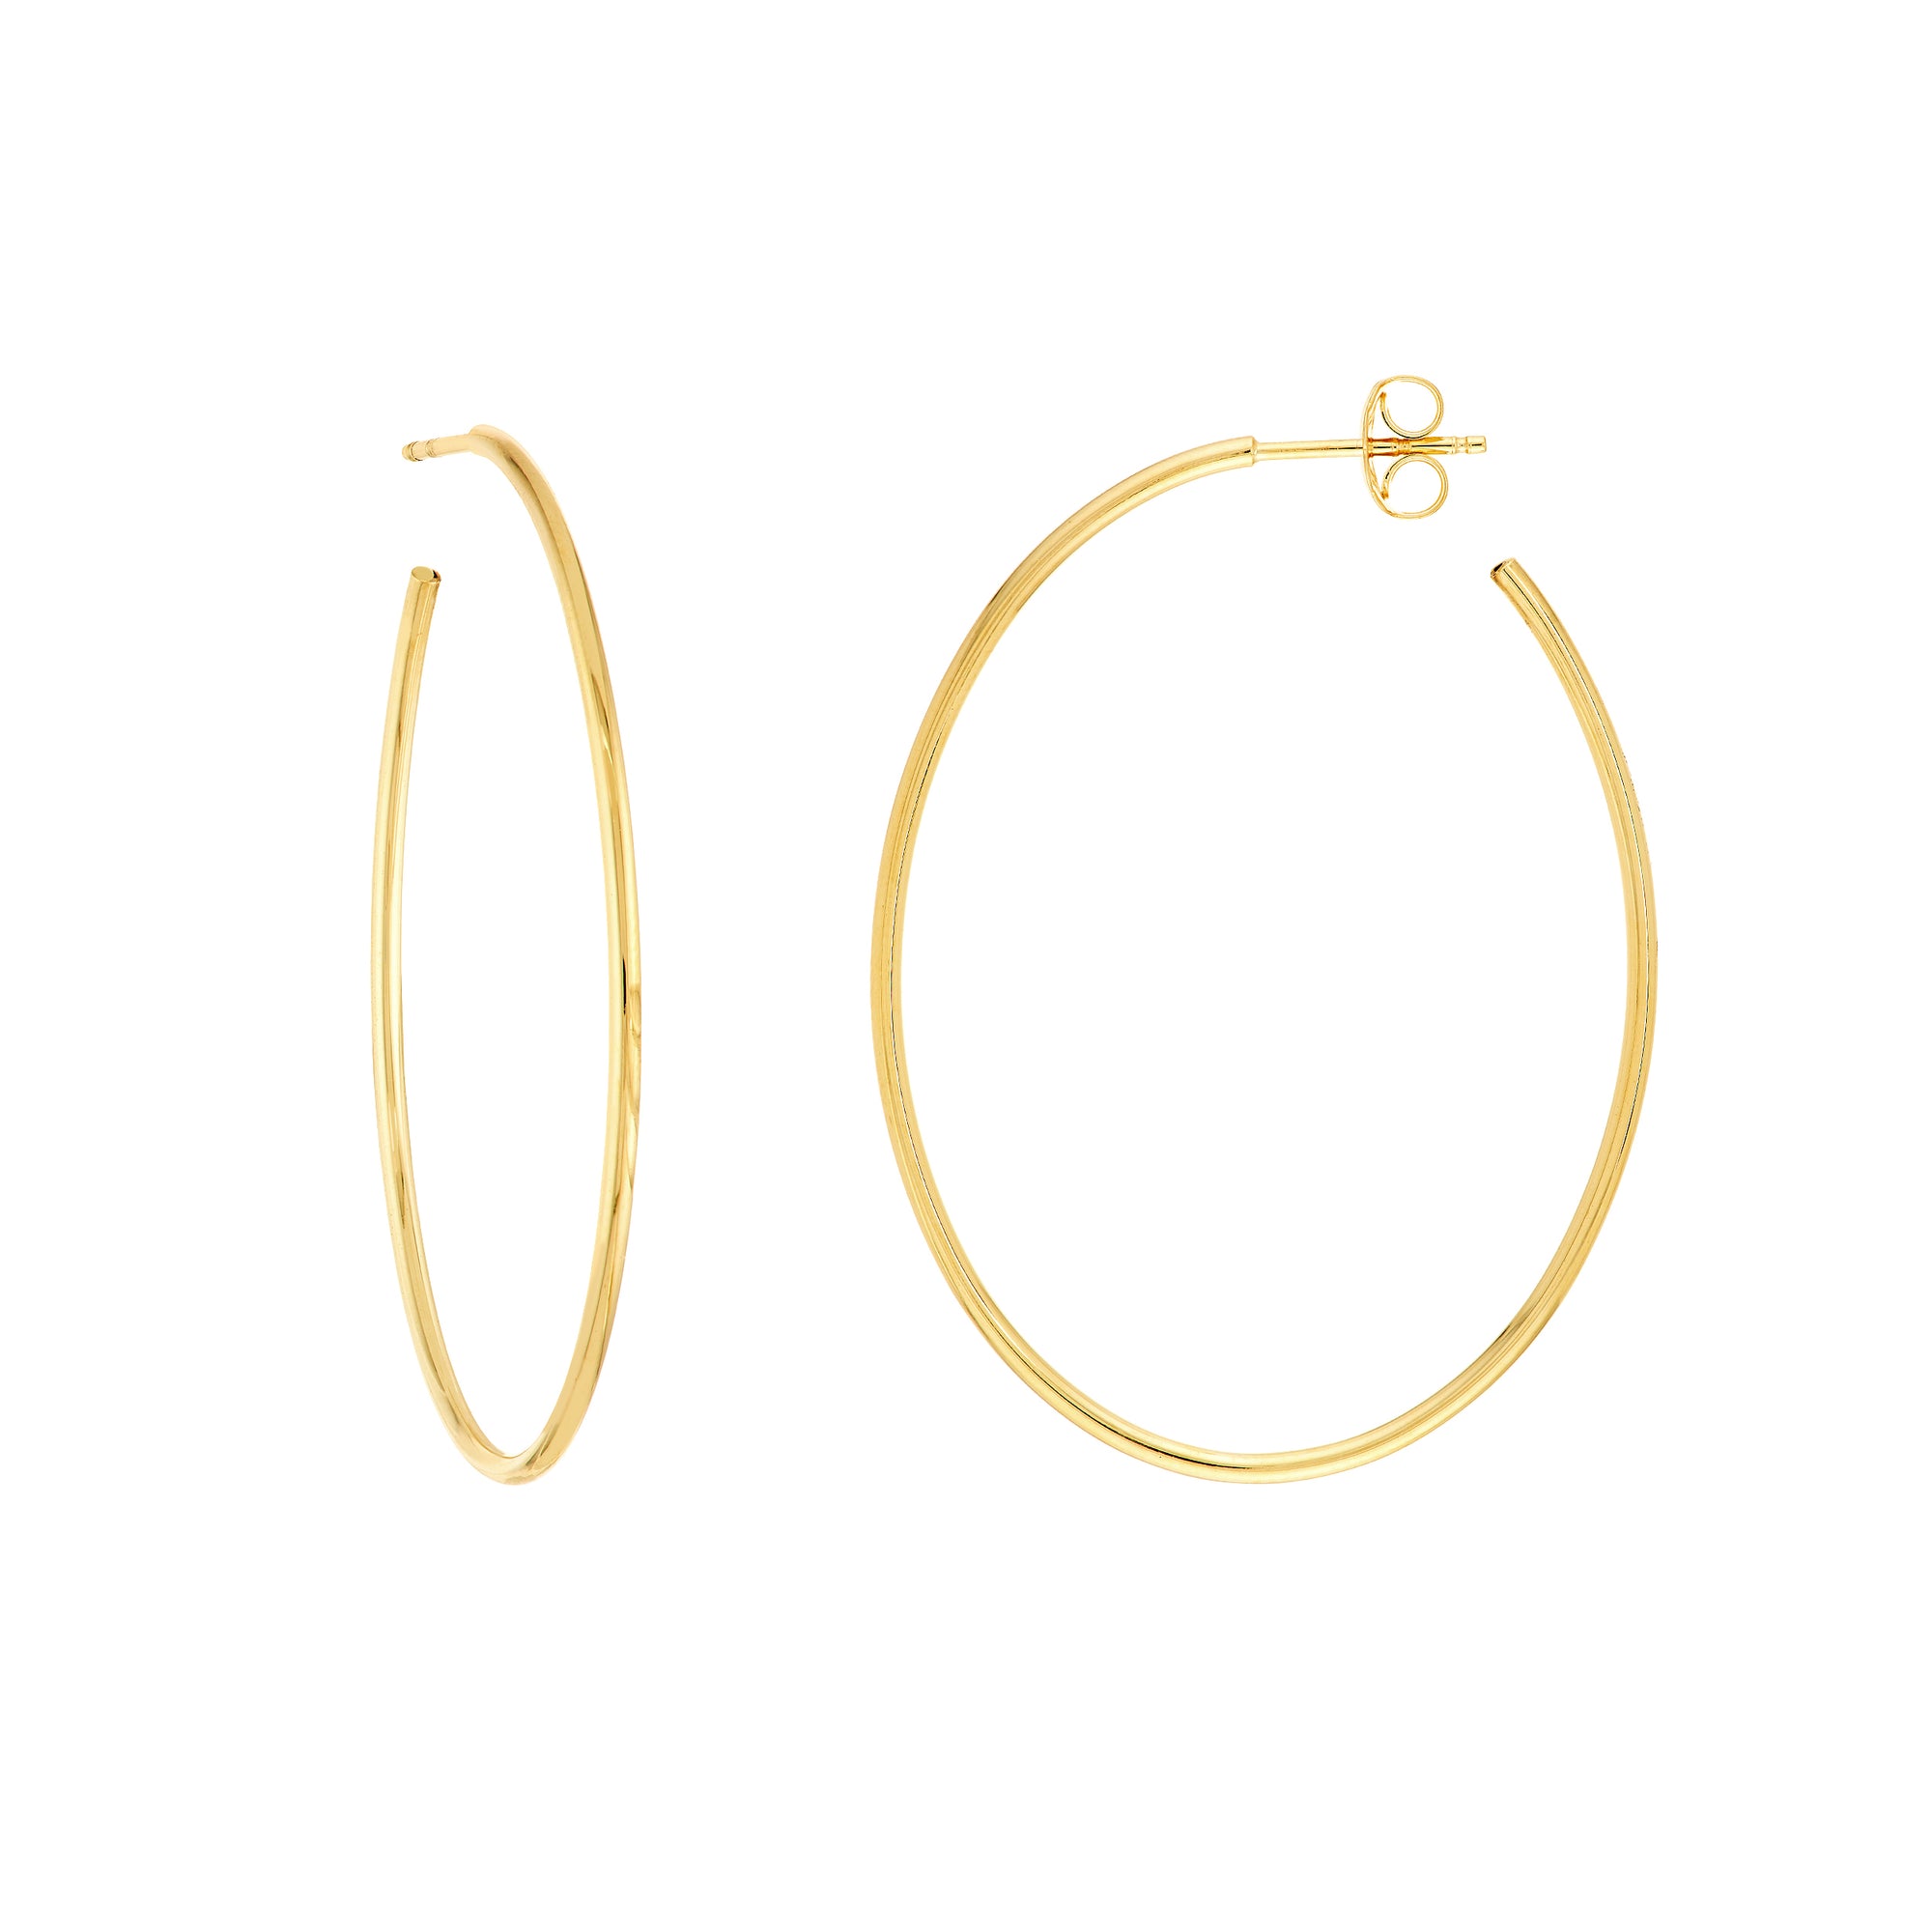 14K Yellow Gold Thin Oval Post Hoop Earrings